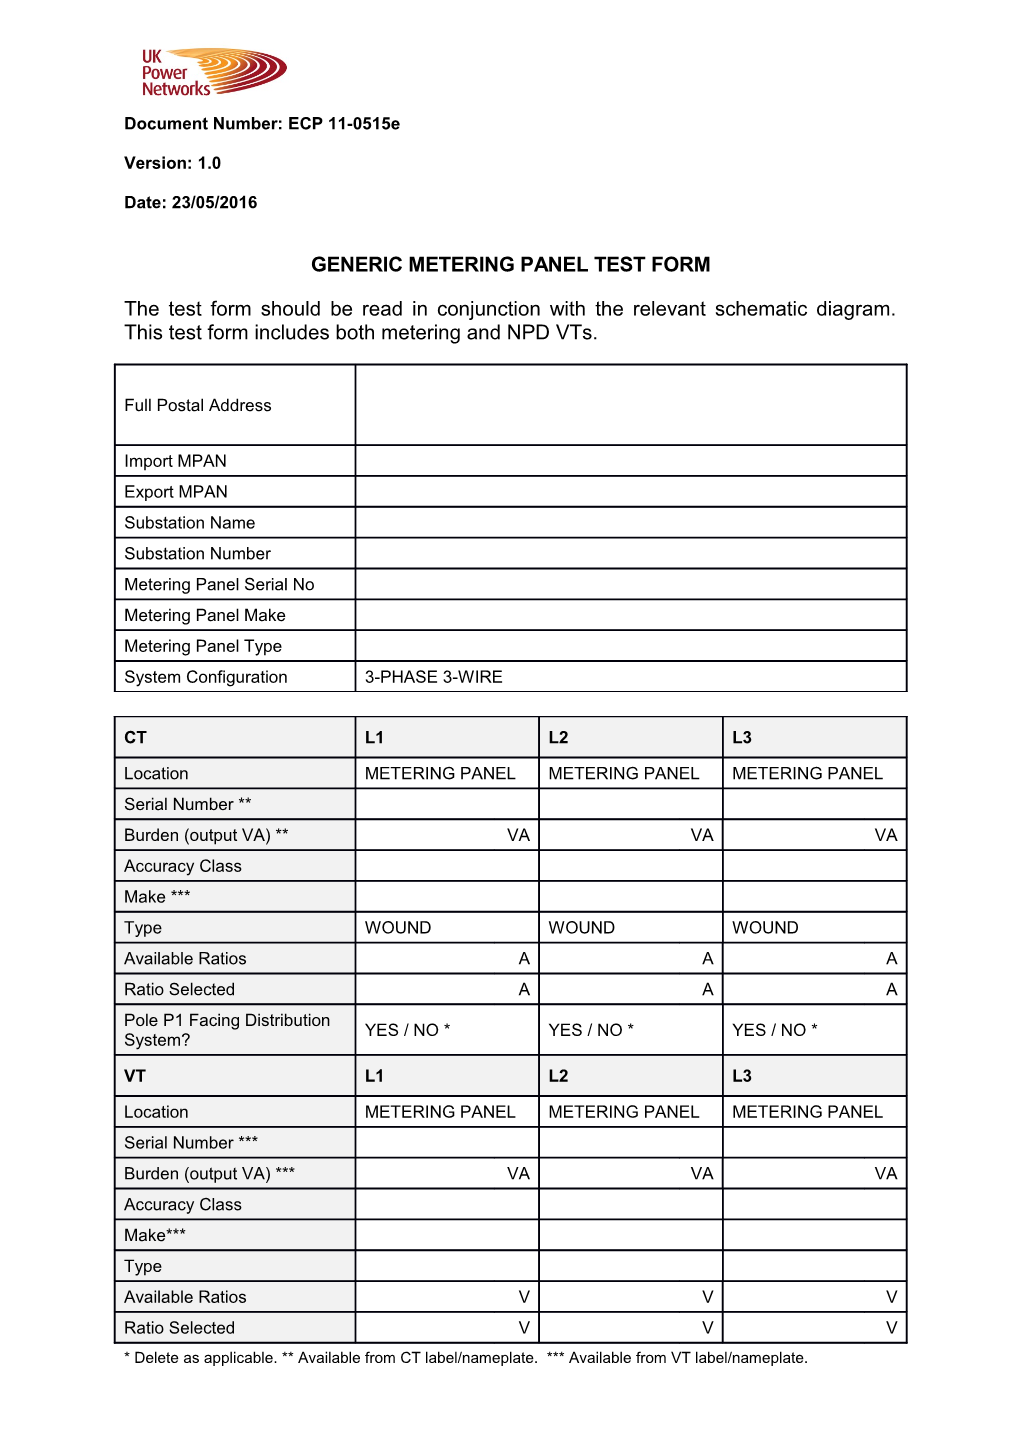 ECP 11-0515E Generic Metering Panel Test Form